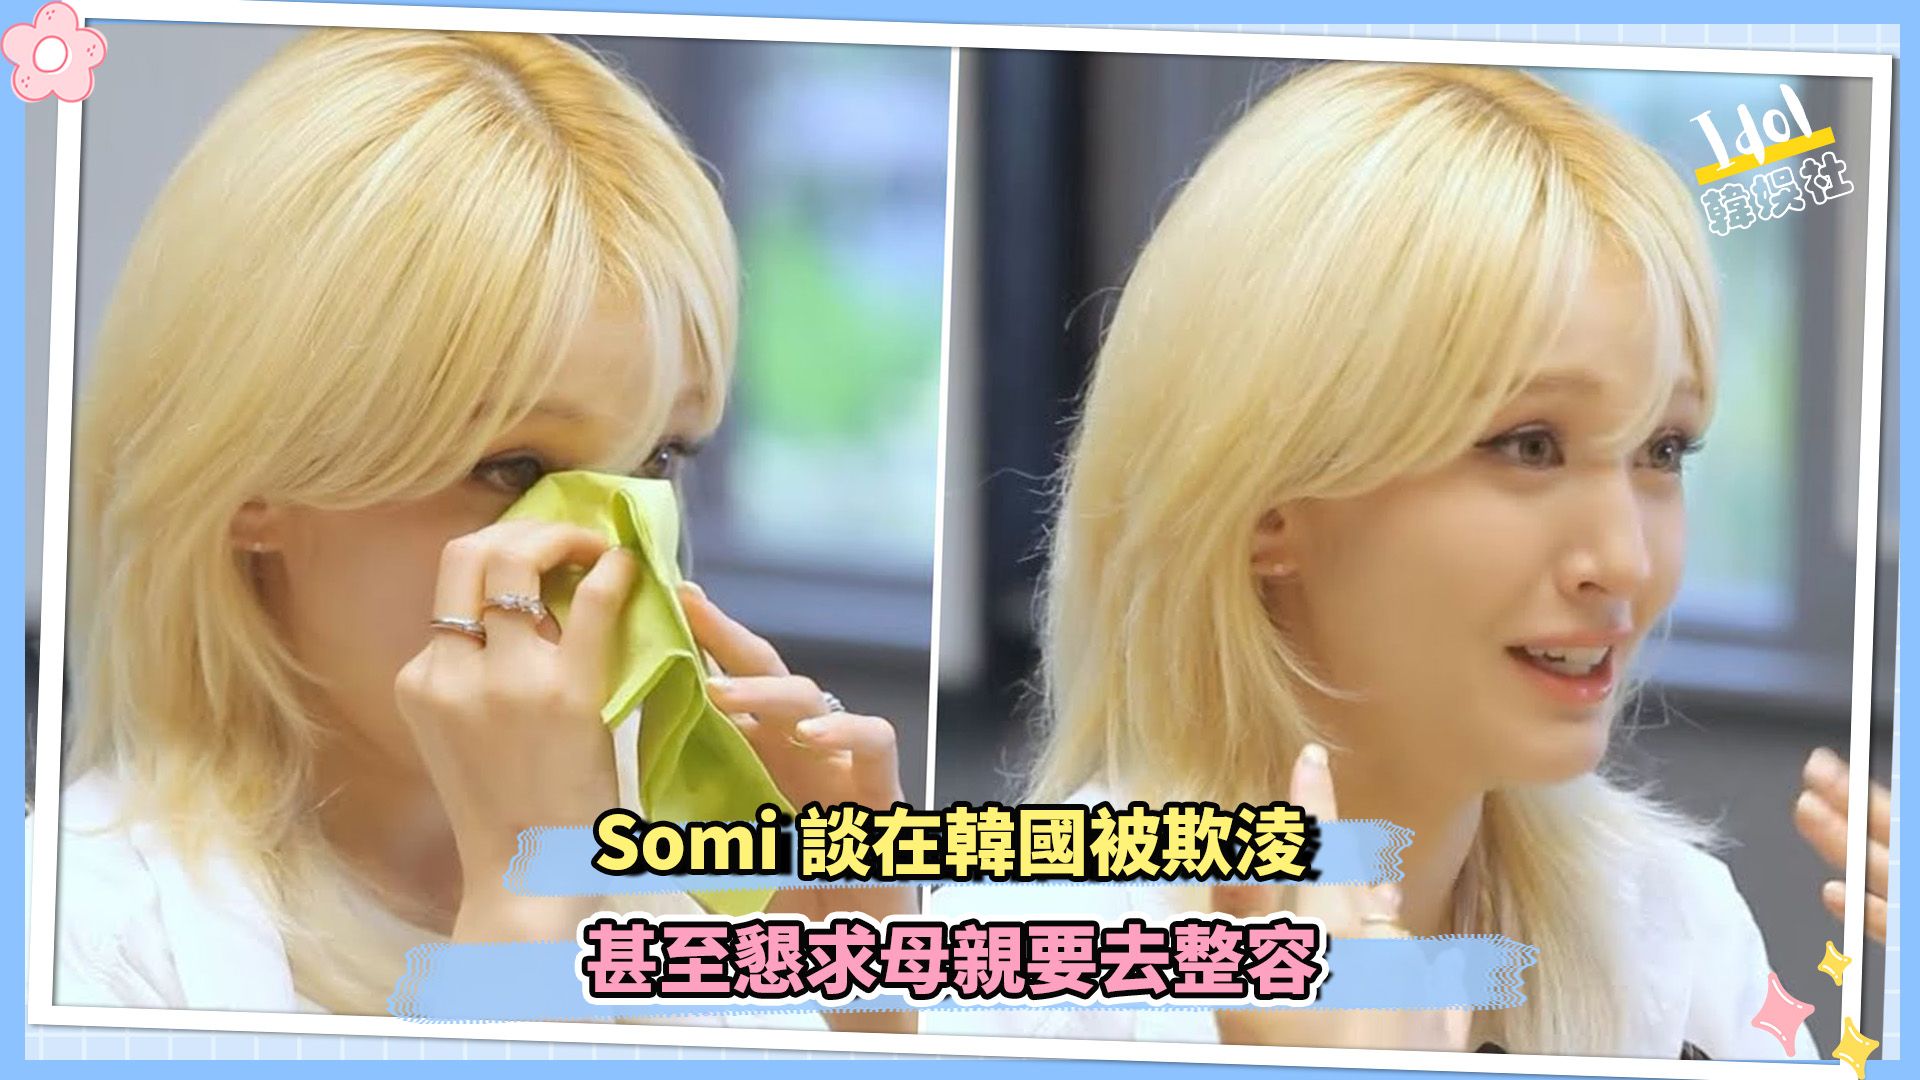 Somi谈在韩国被欺凌 甚至恳求母亲去整容